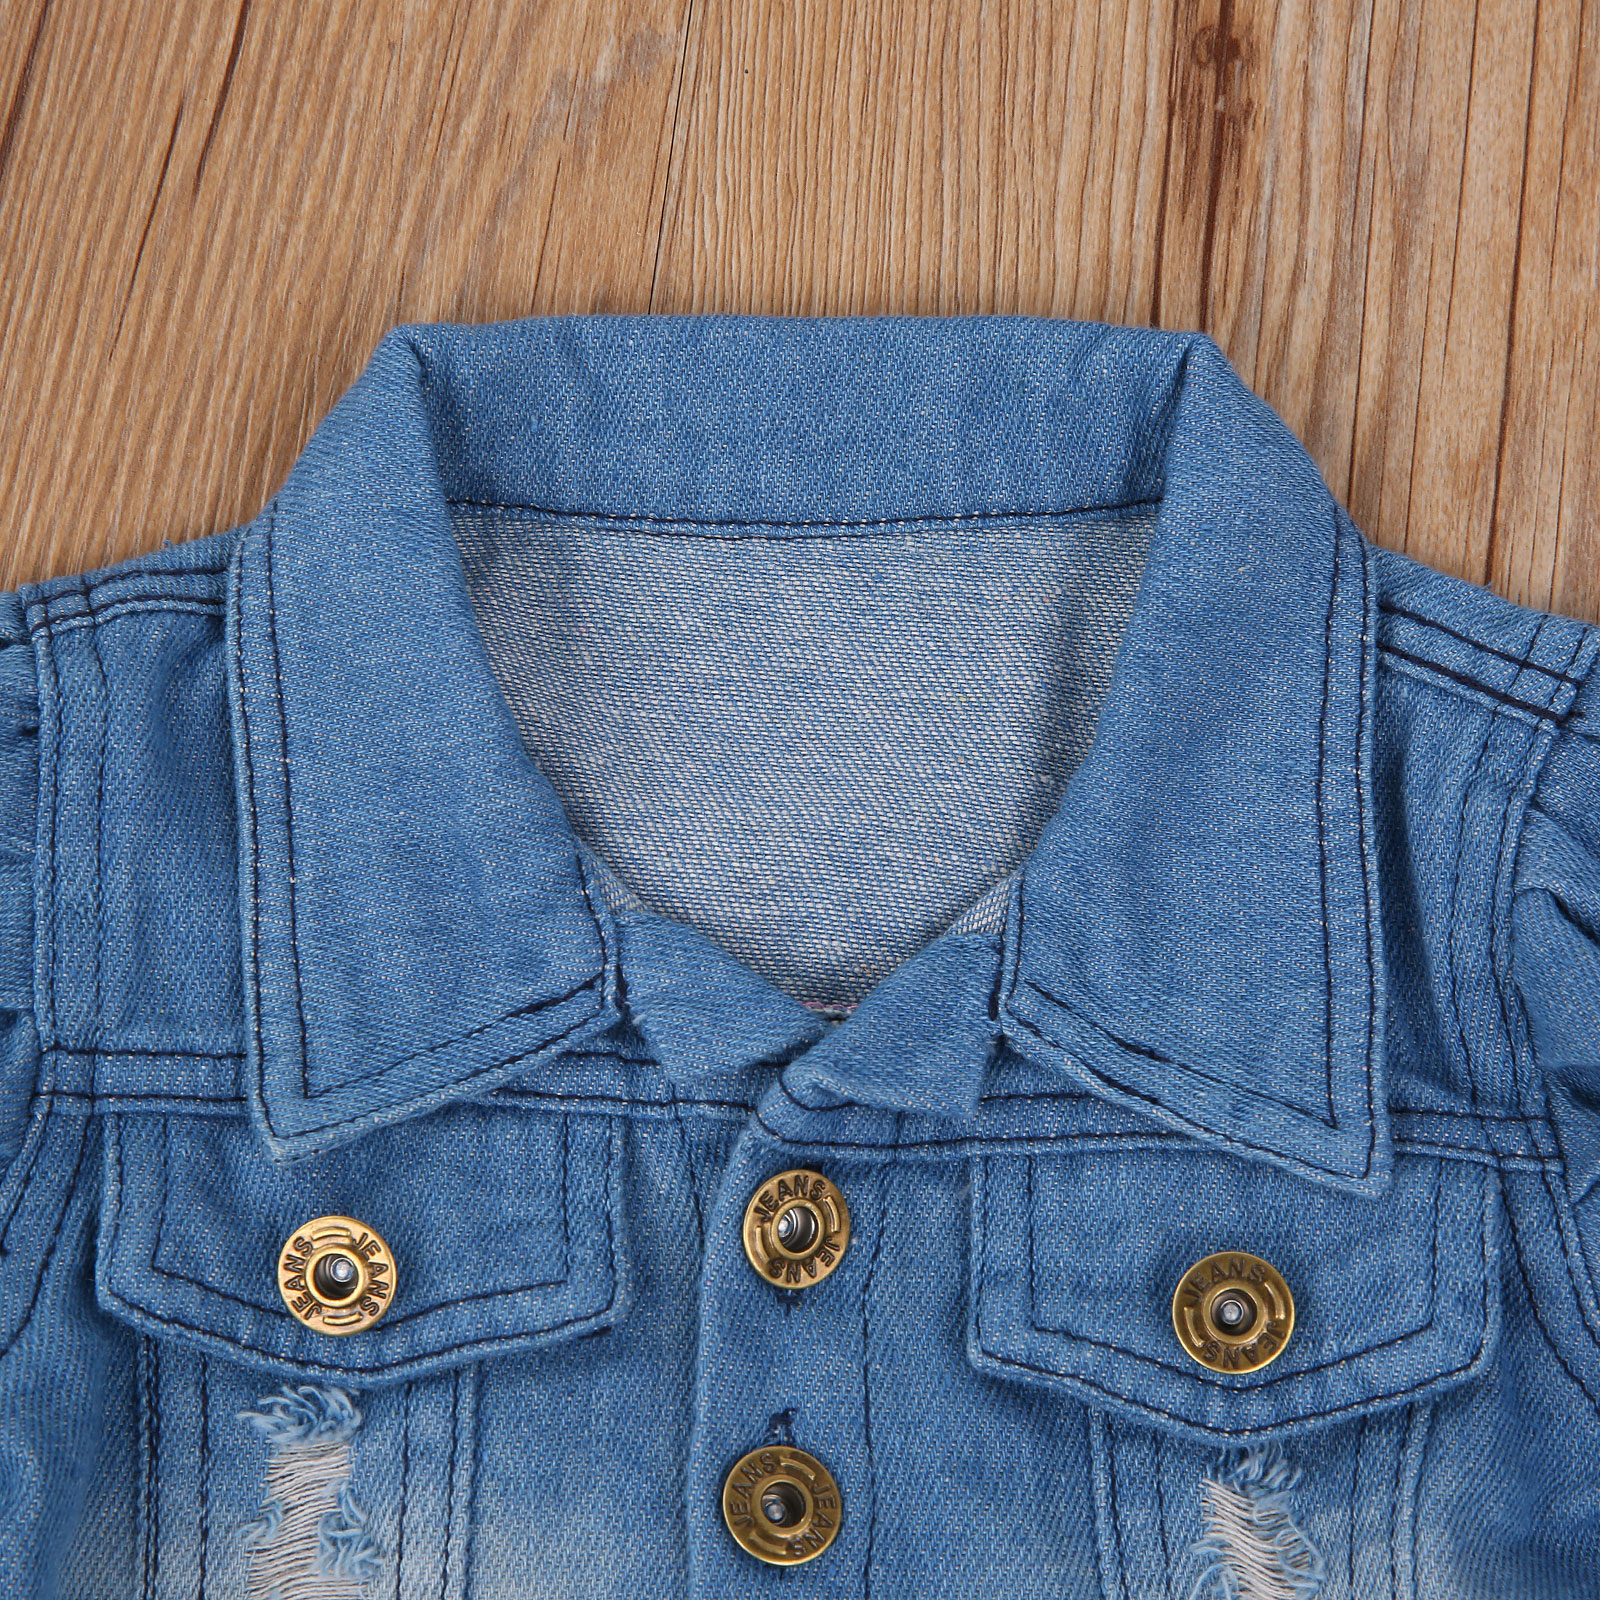 hirigin Kids 2piece Clothes Set Girls Blue Puff Sleeve Denim Jacket and Skirt - image 5 of 8